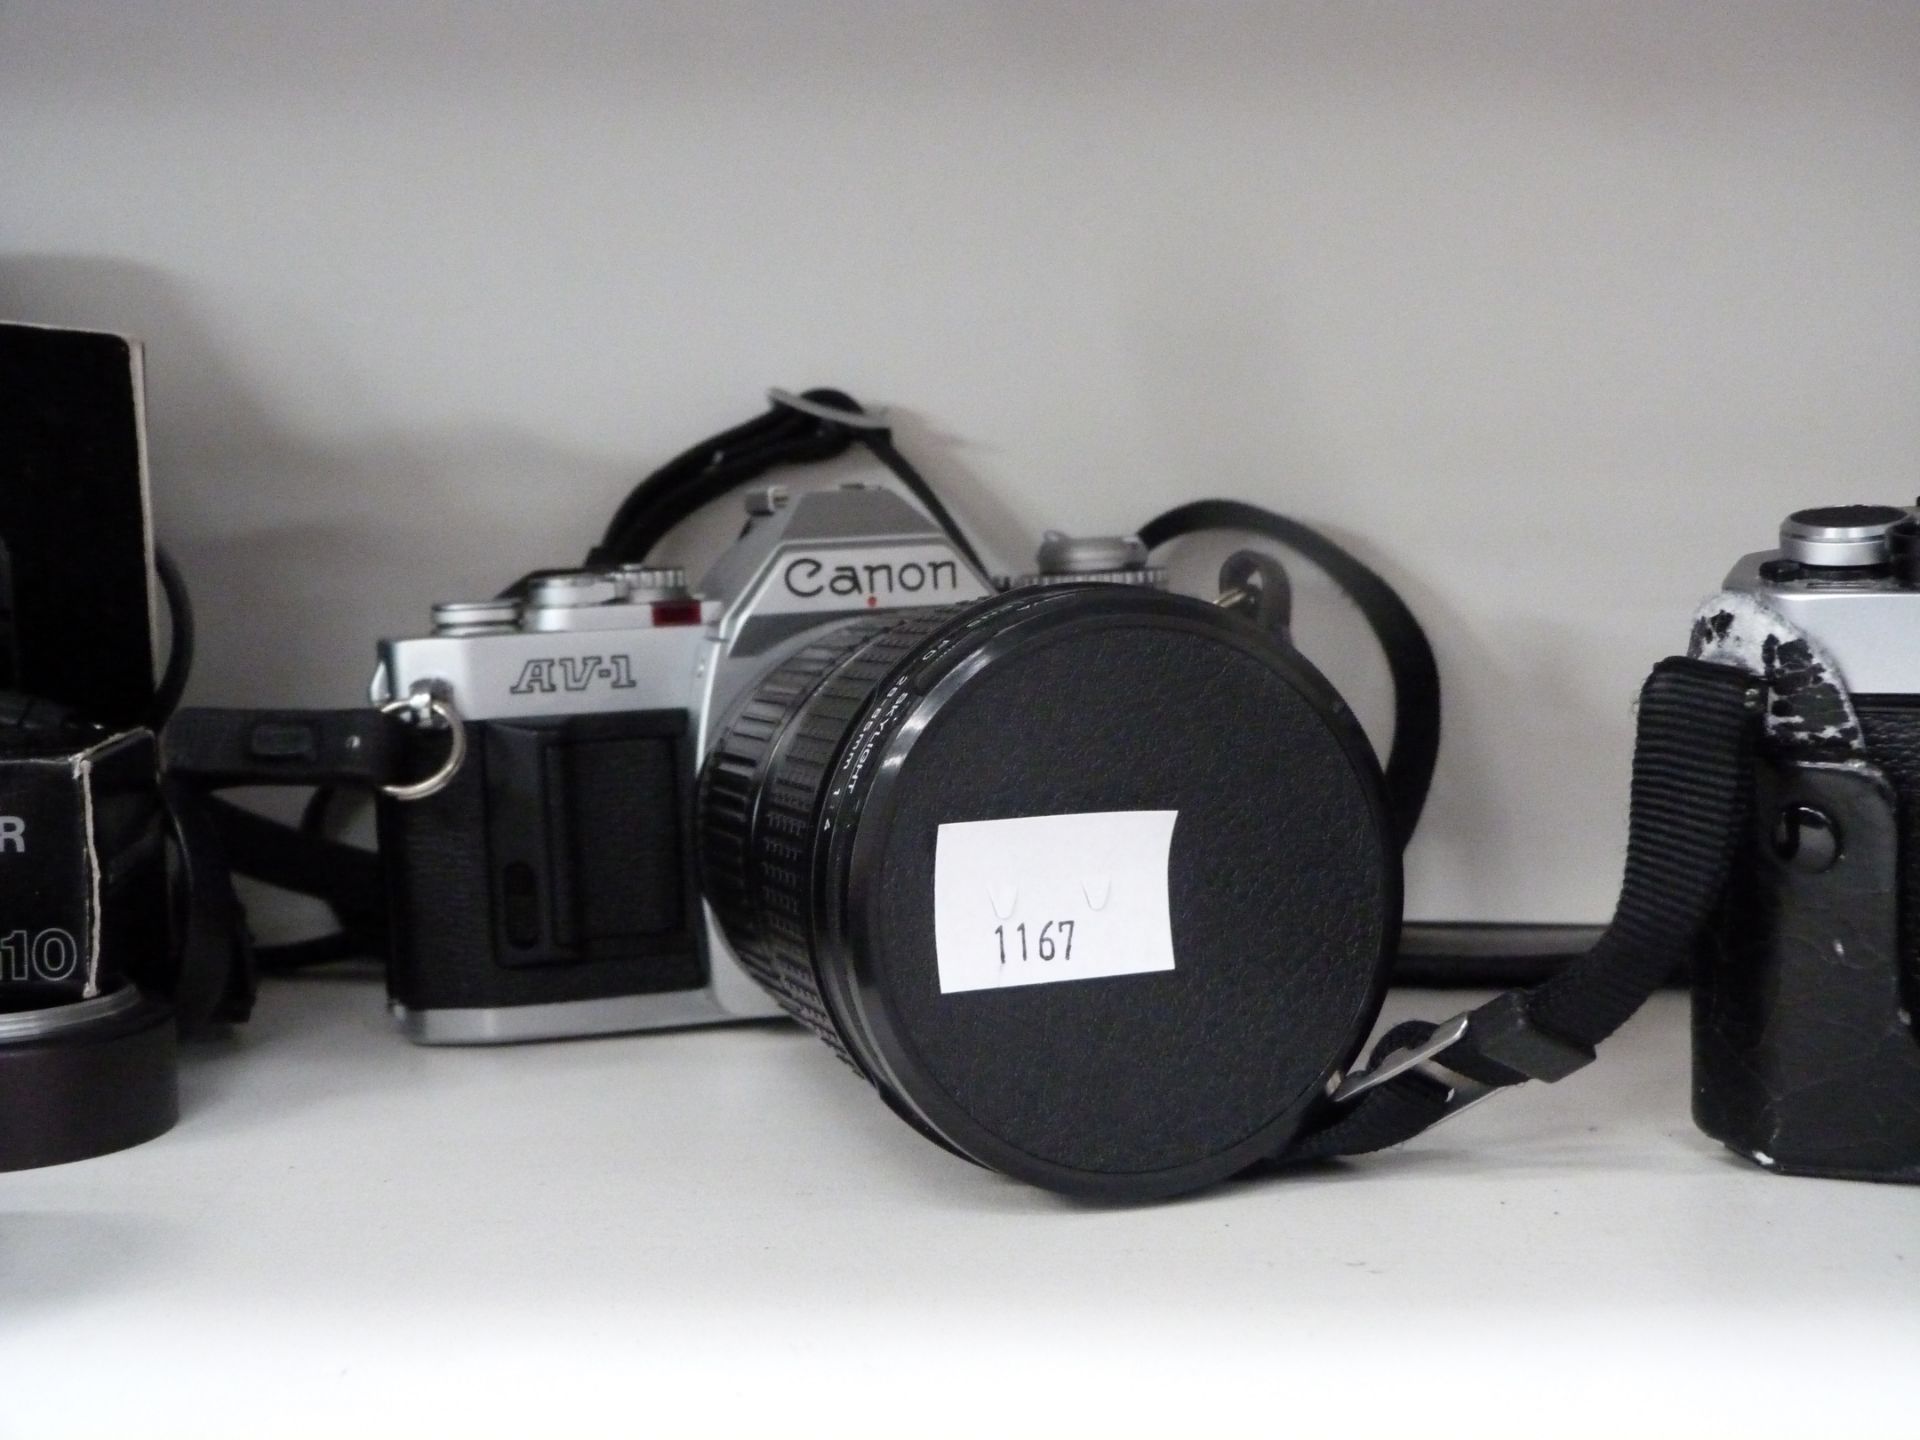 A Canon AV1 35mm camera, Nikon FT 35mm camera and a Nikon TW Zoom 35-70 (est £90-£120)